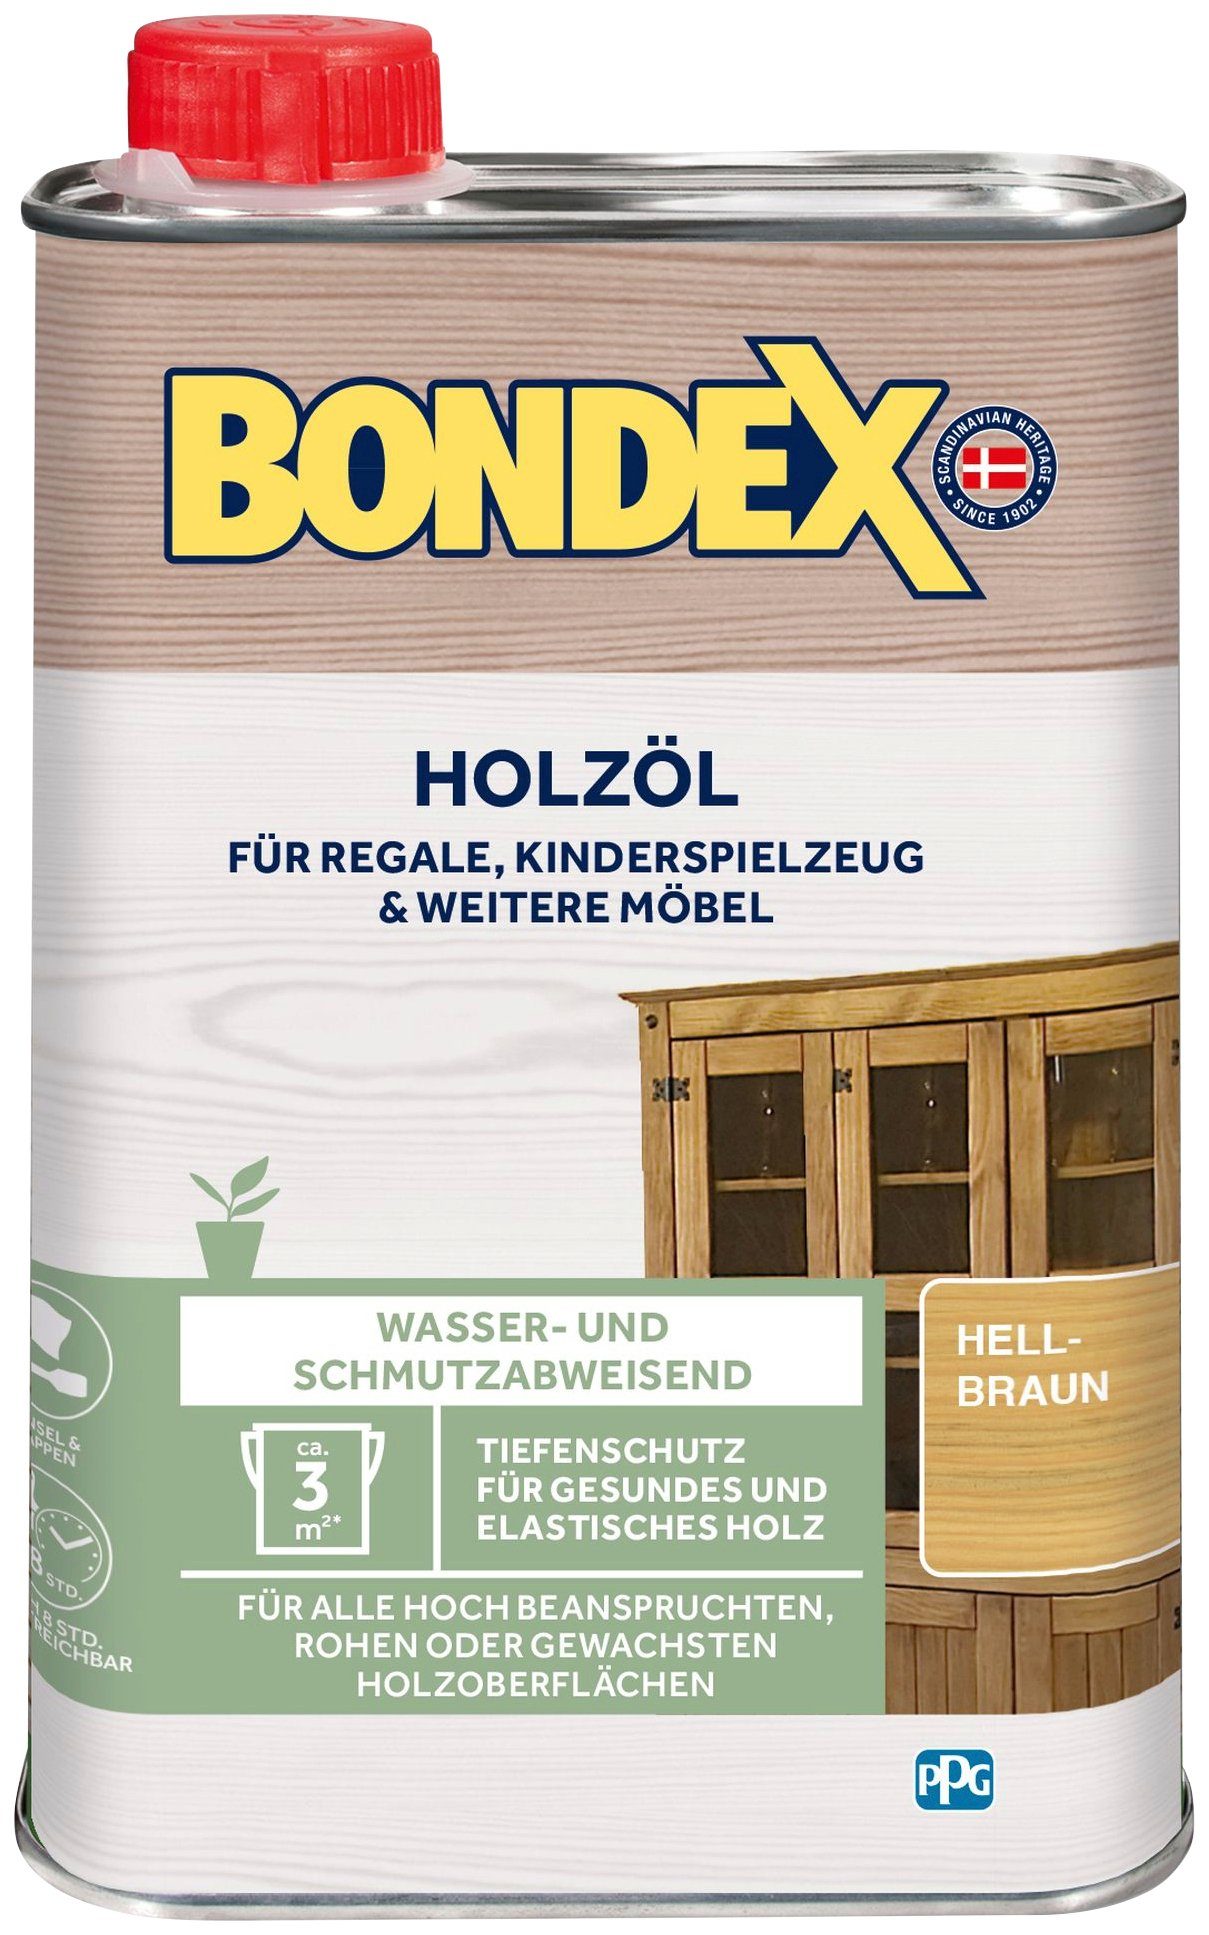 Bondex Holzöl HOLZÖL, Farblos, 0,25 Liter Inhalt hellbraun